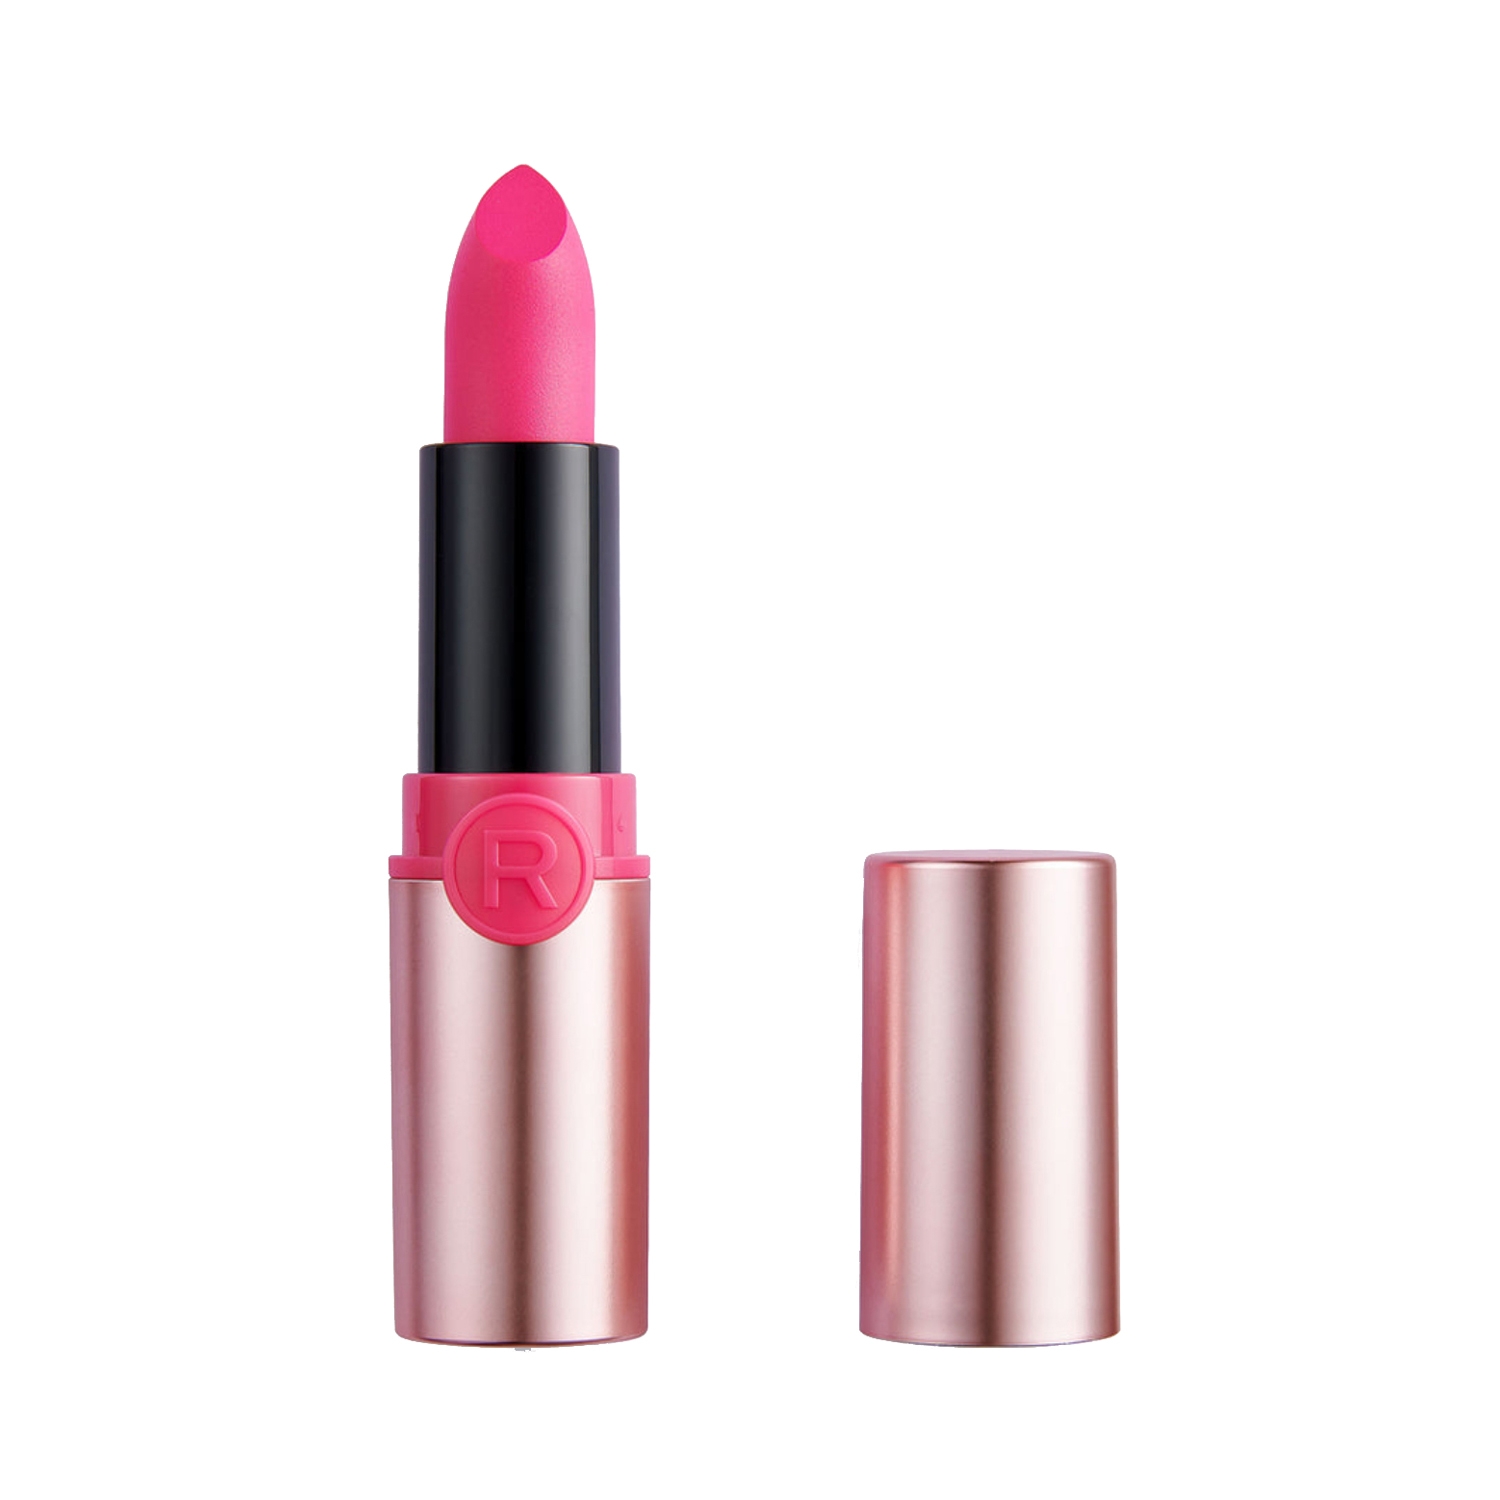 Makeup Revolution | Makeup Revolution Powder Matte Lipstick - Flamingo (3.5g)